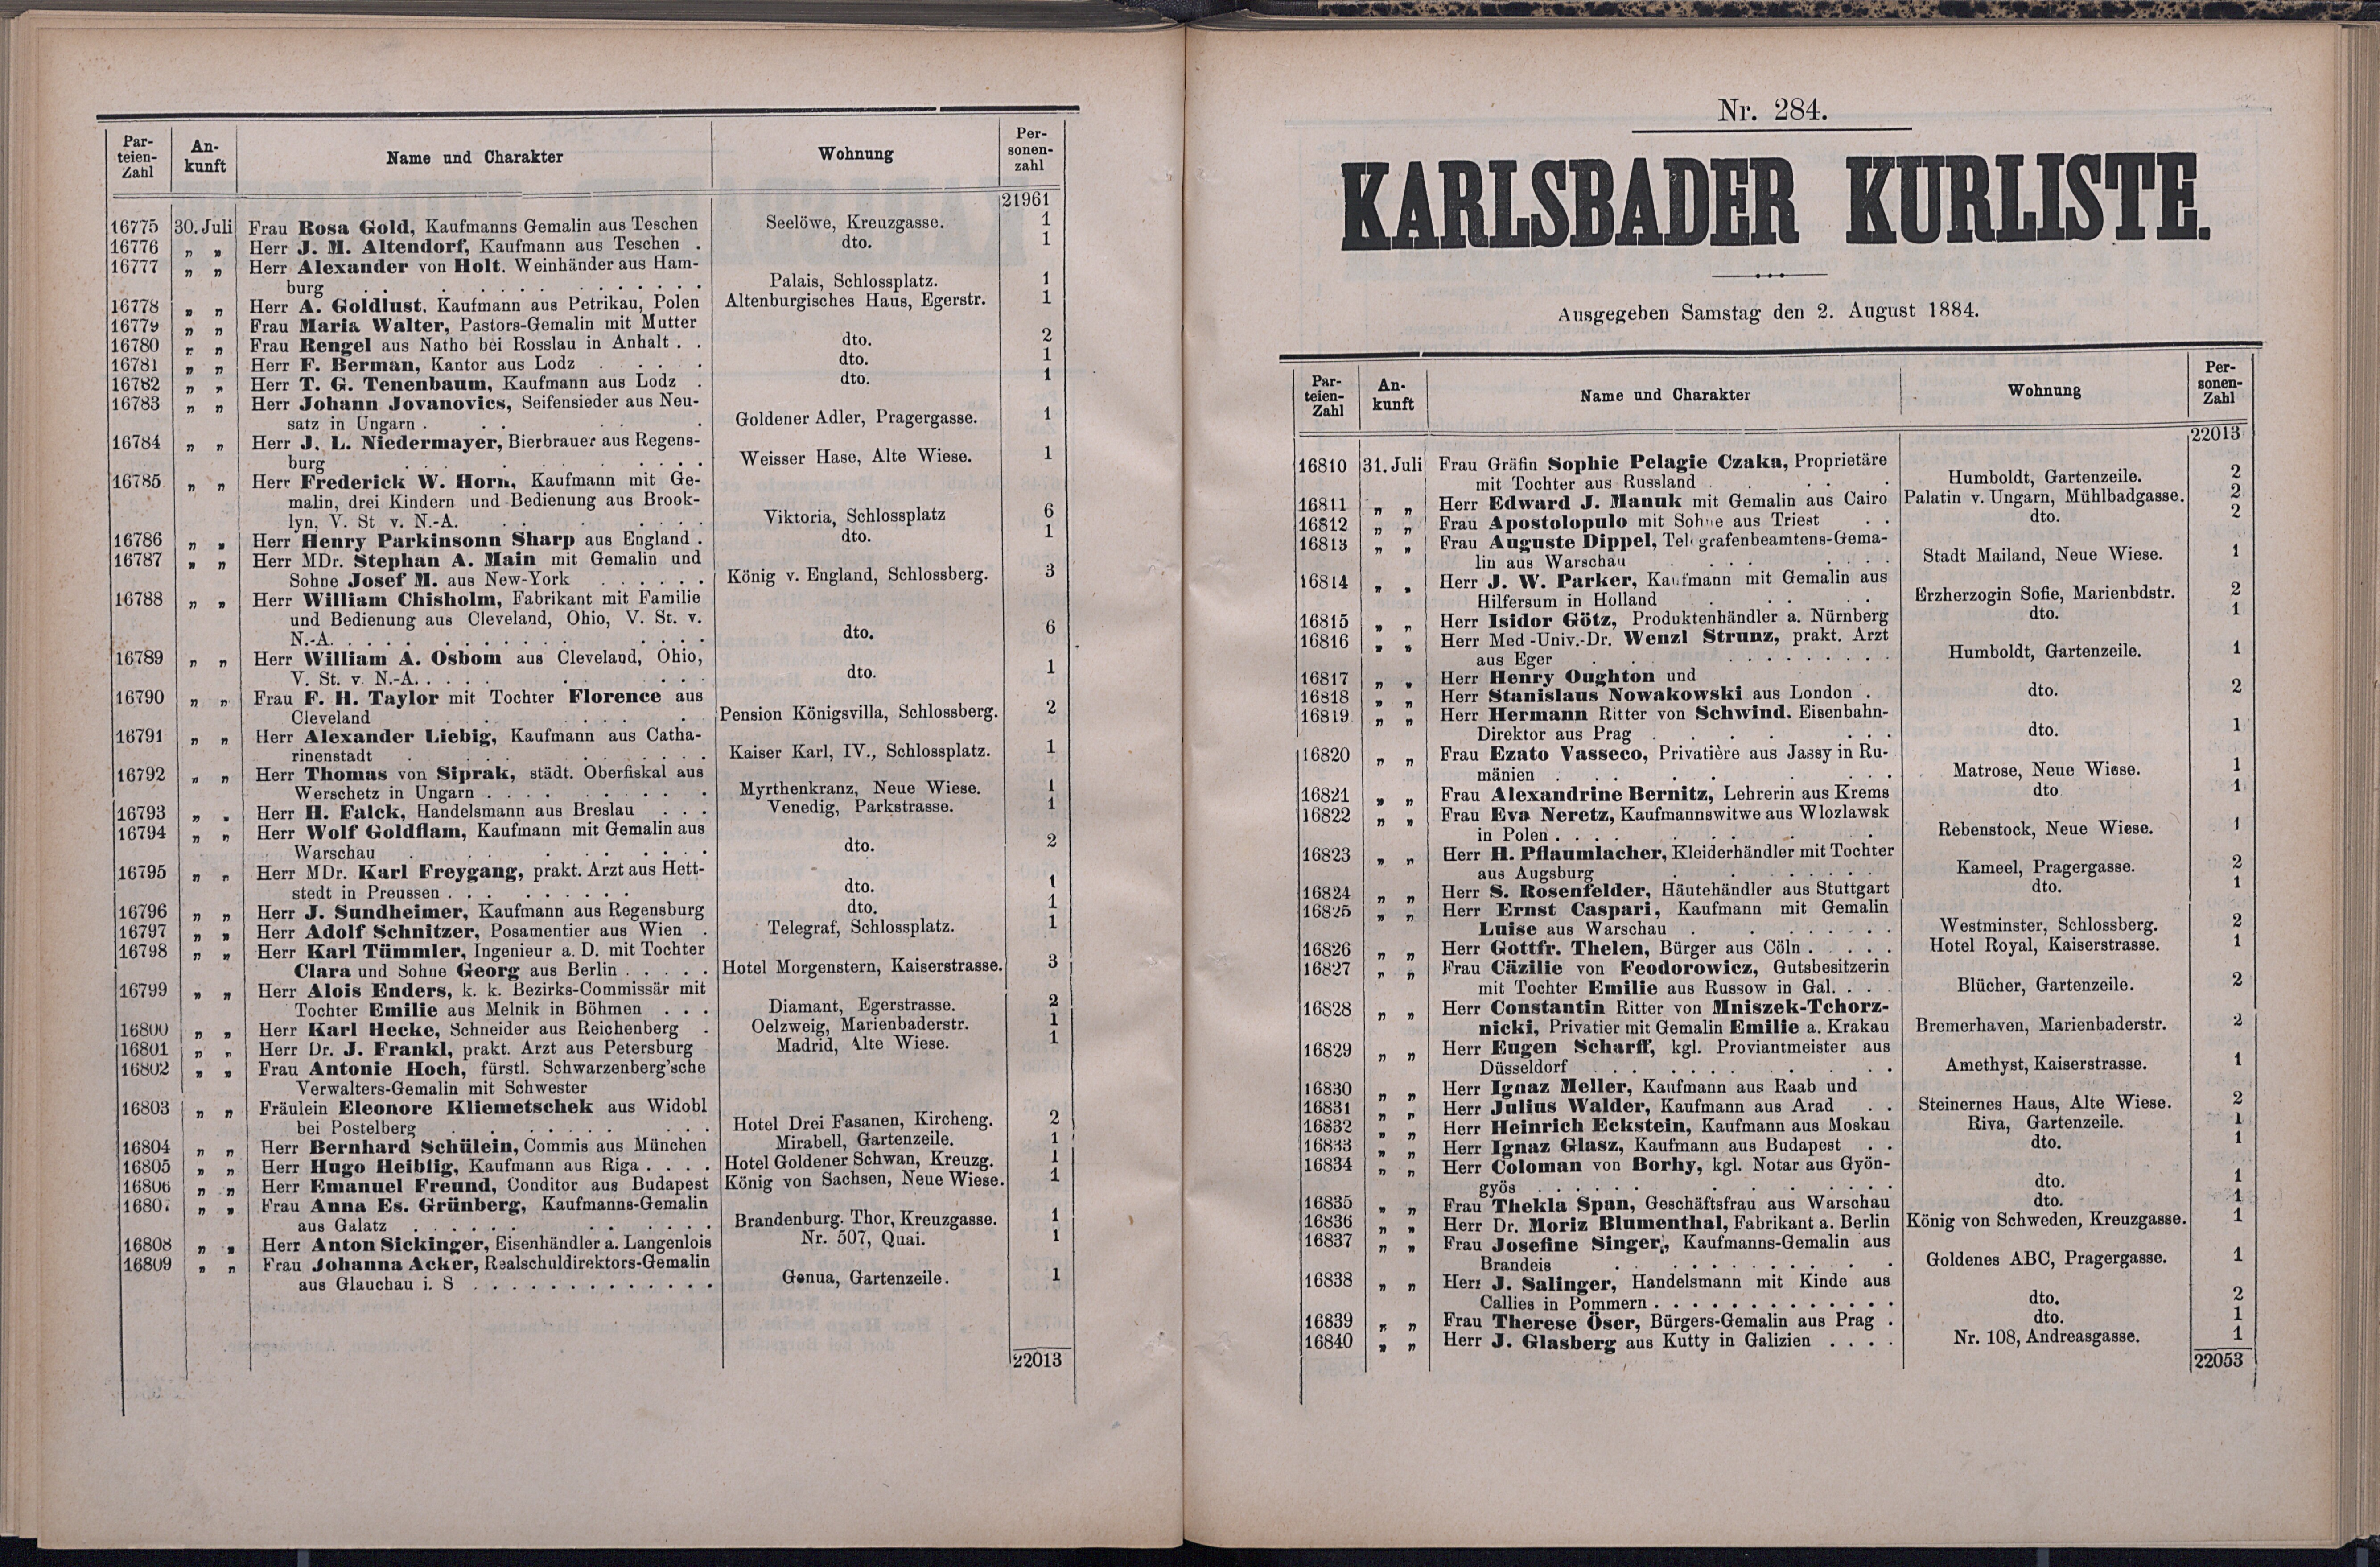 301. soap-kv_knihovna_karlsbader-kurliste-1884_3020